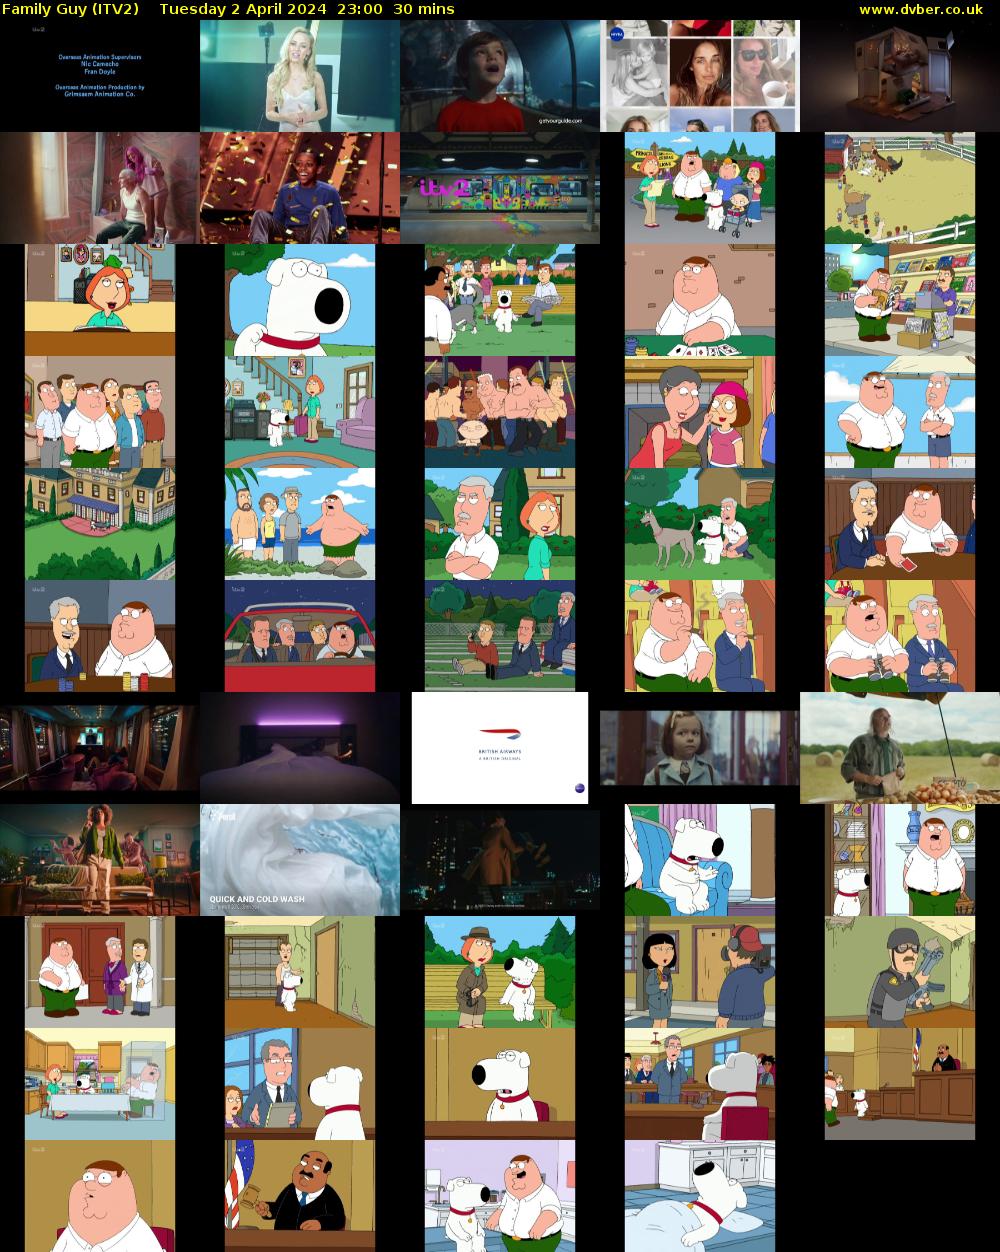 Family Guy (ITV2) Tuesday 2 April 2024 23:00 - 23:30